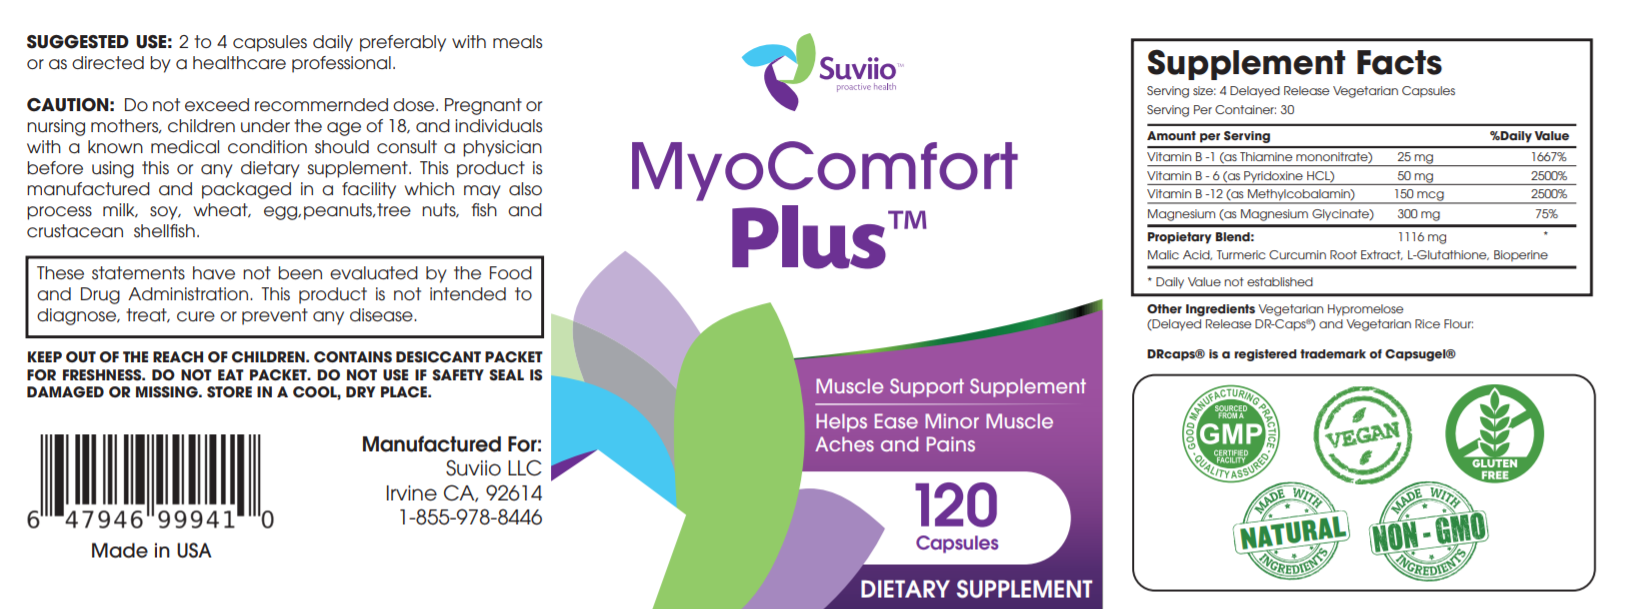 MyoComfort Plus